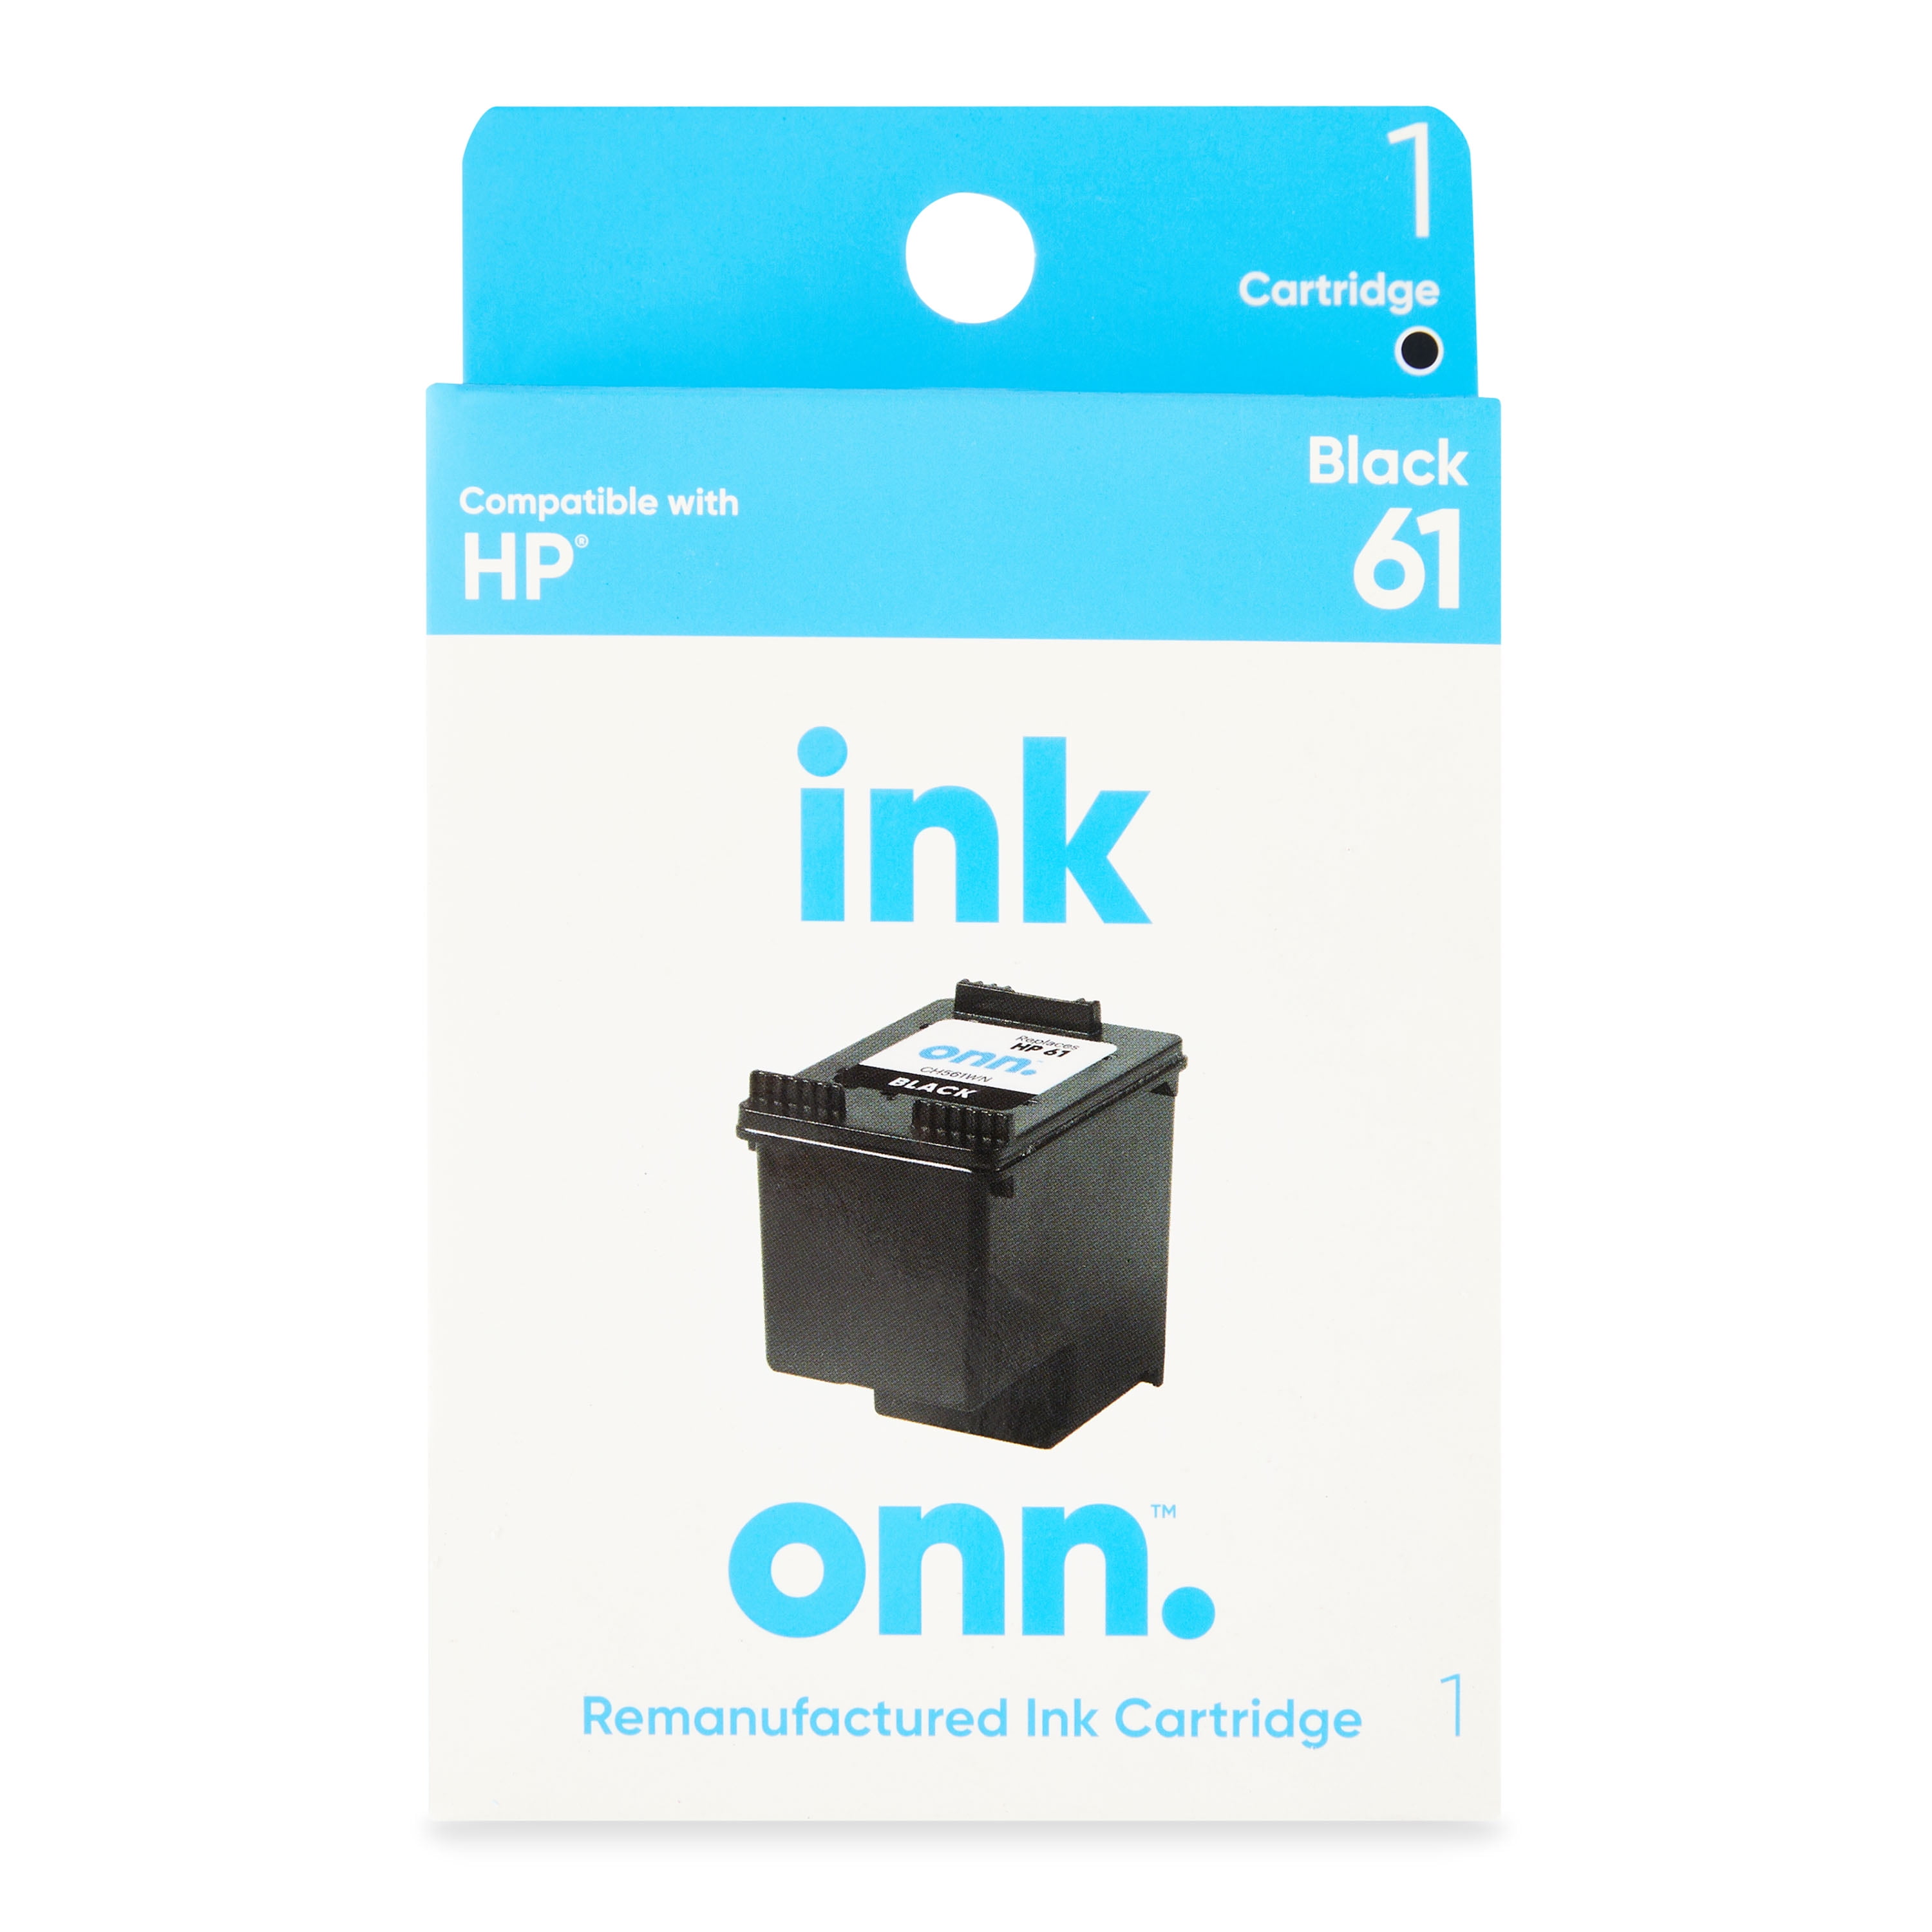 afspejle Imperialisme tro onn. Remanufactured Ink Cartridge, HP 61 Black - Walmart.com